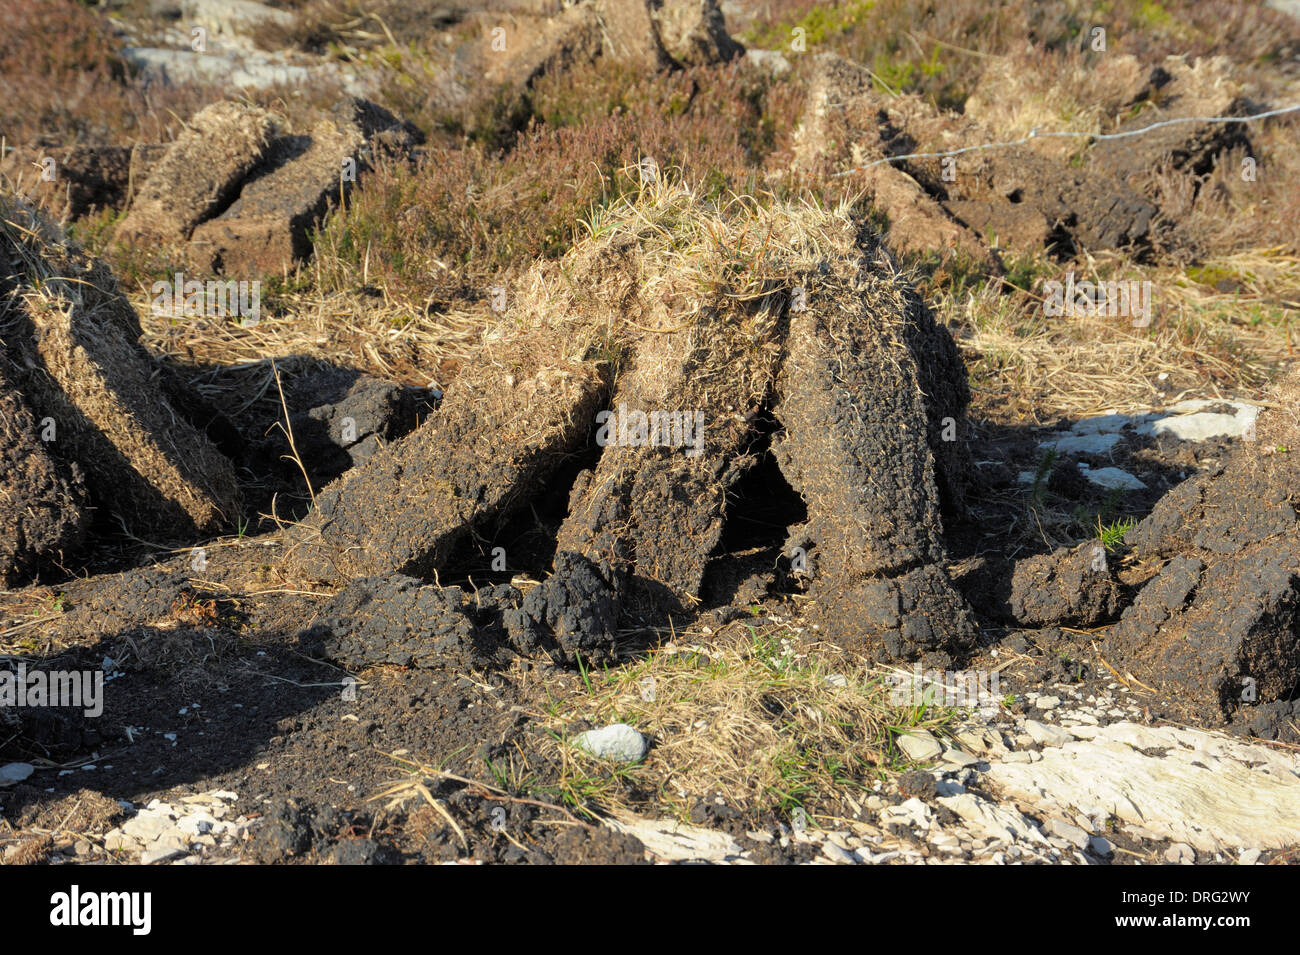 Traditional turf-cutting near Bantry Co Cork, Ireland stack of peat blocks drying Stock Photo